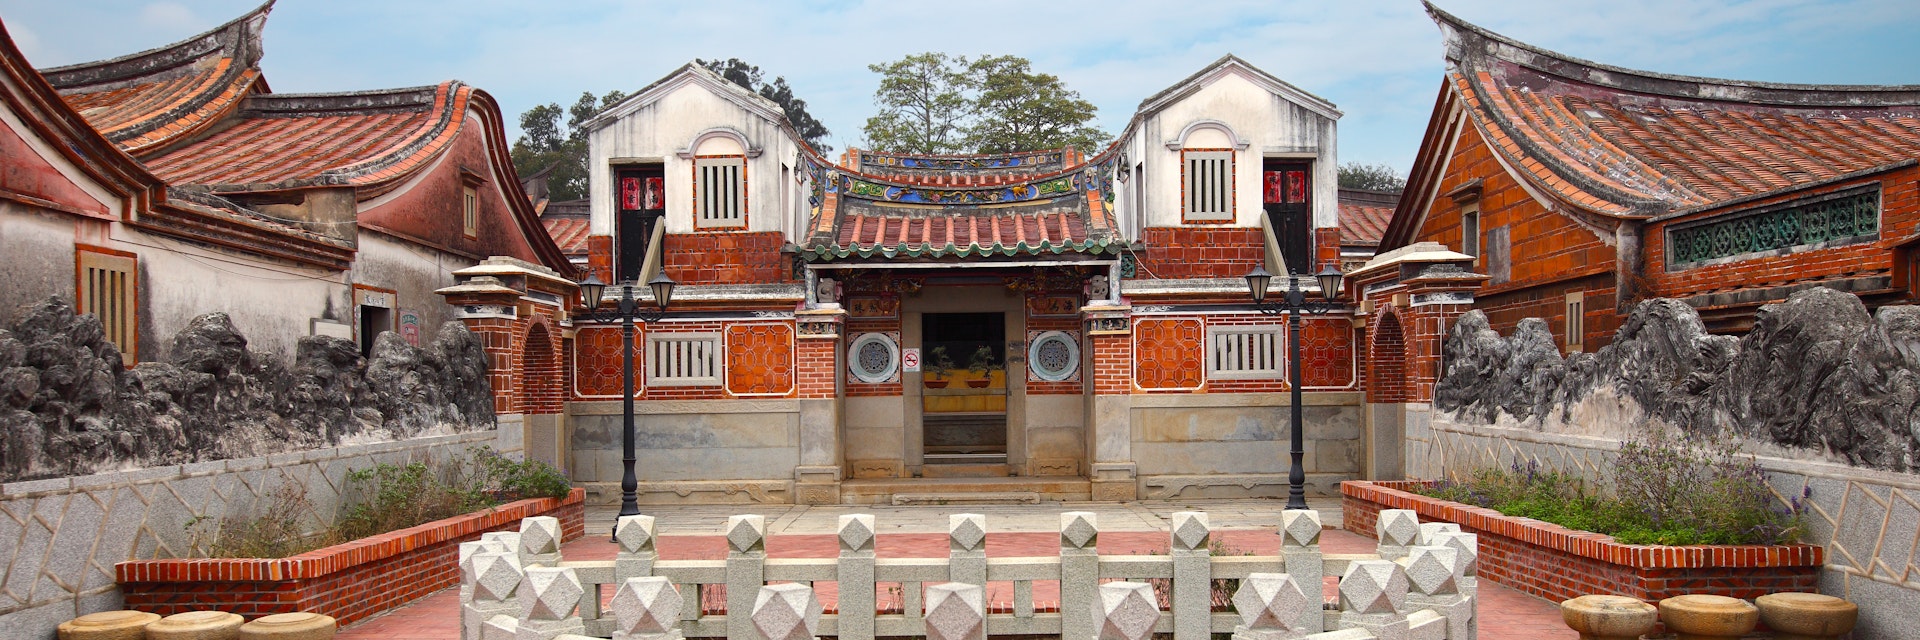 Traditional architecture in Kinmen, Taiwan